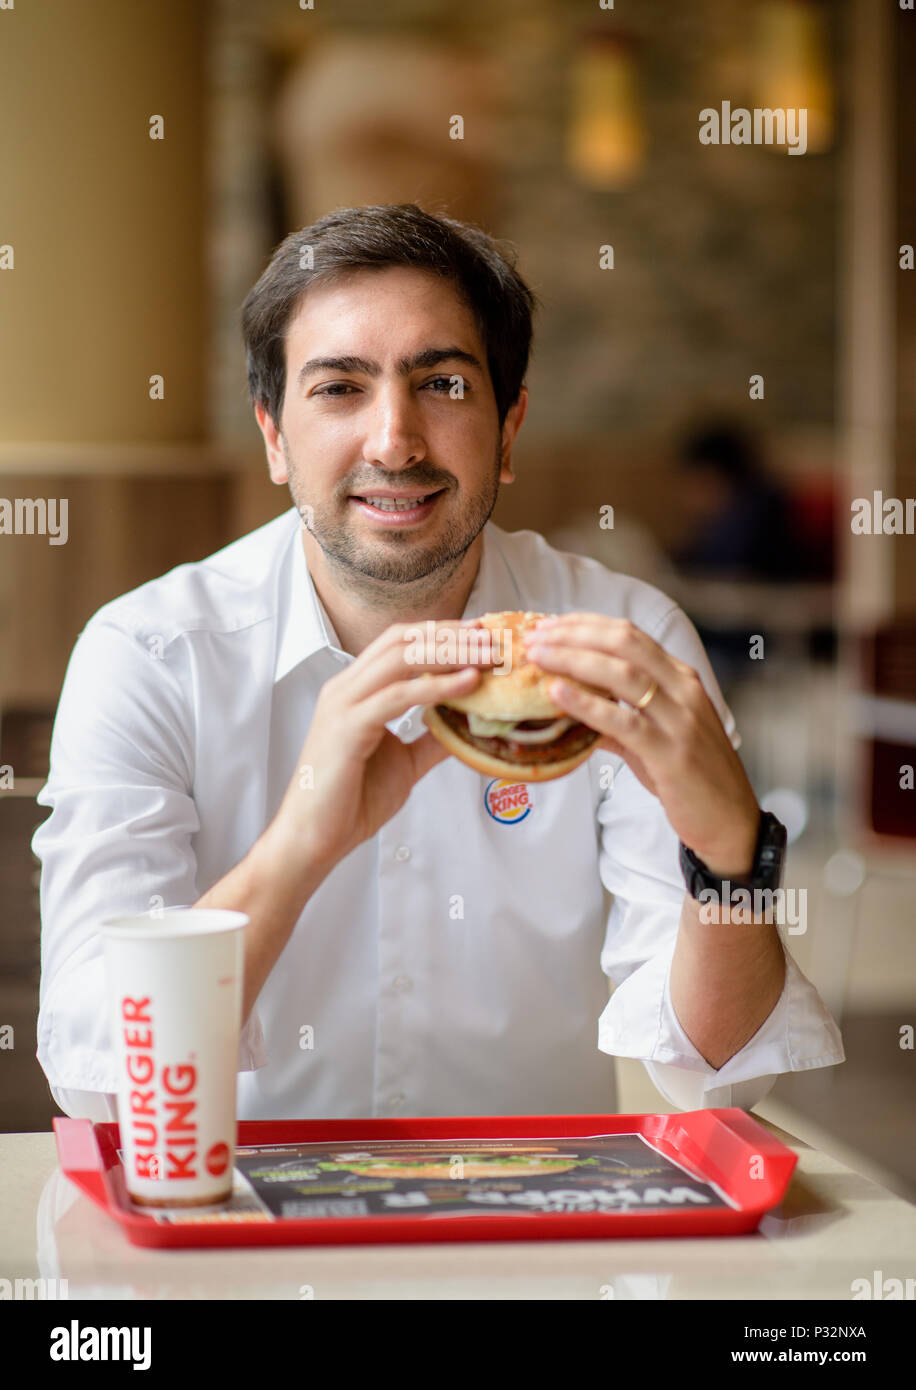 15 June 2018, Germany, Munich: Carlos Eduardo Baron, Burger King's manager in Germany, eats a burger during an interview. Photo: Matthias Balk/dpa Stock Photo